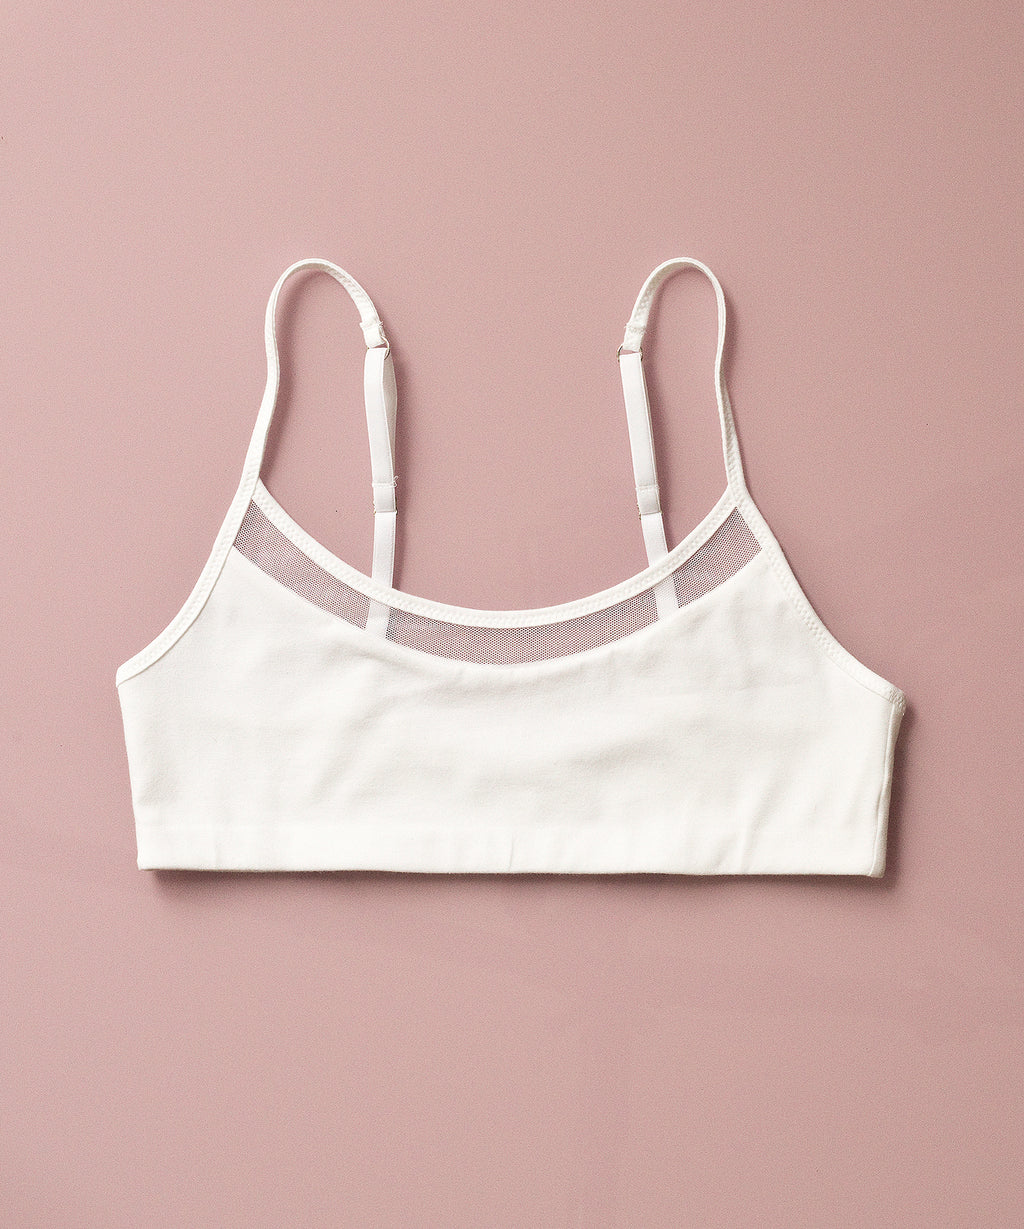 Boujo-hake-underwear-crop-top-organic-cotton-jersey-mesh-white